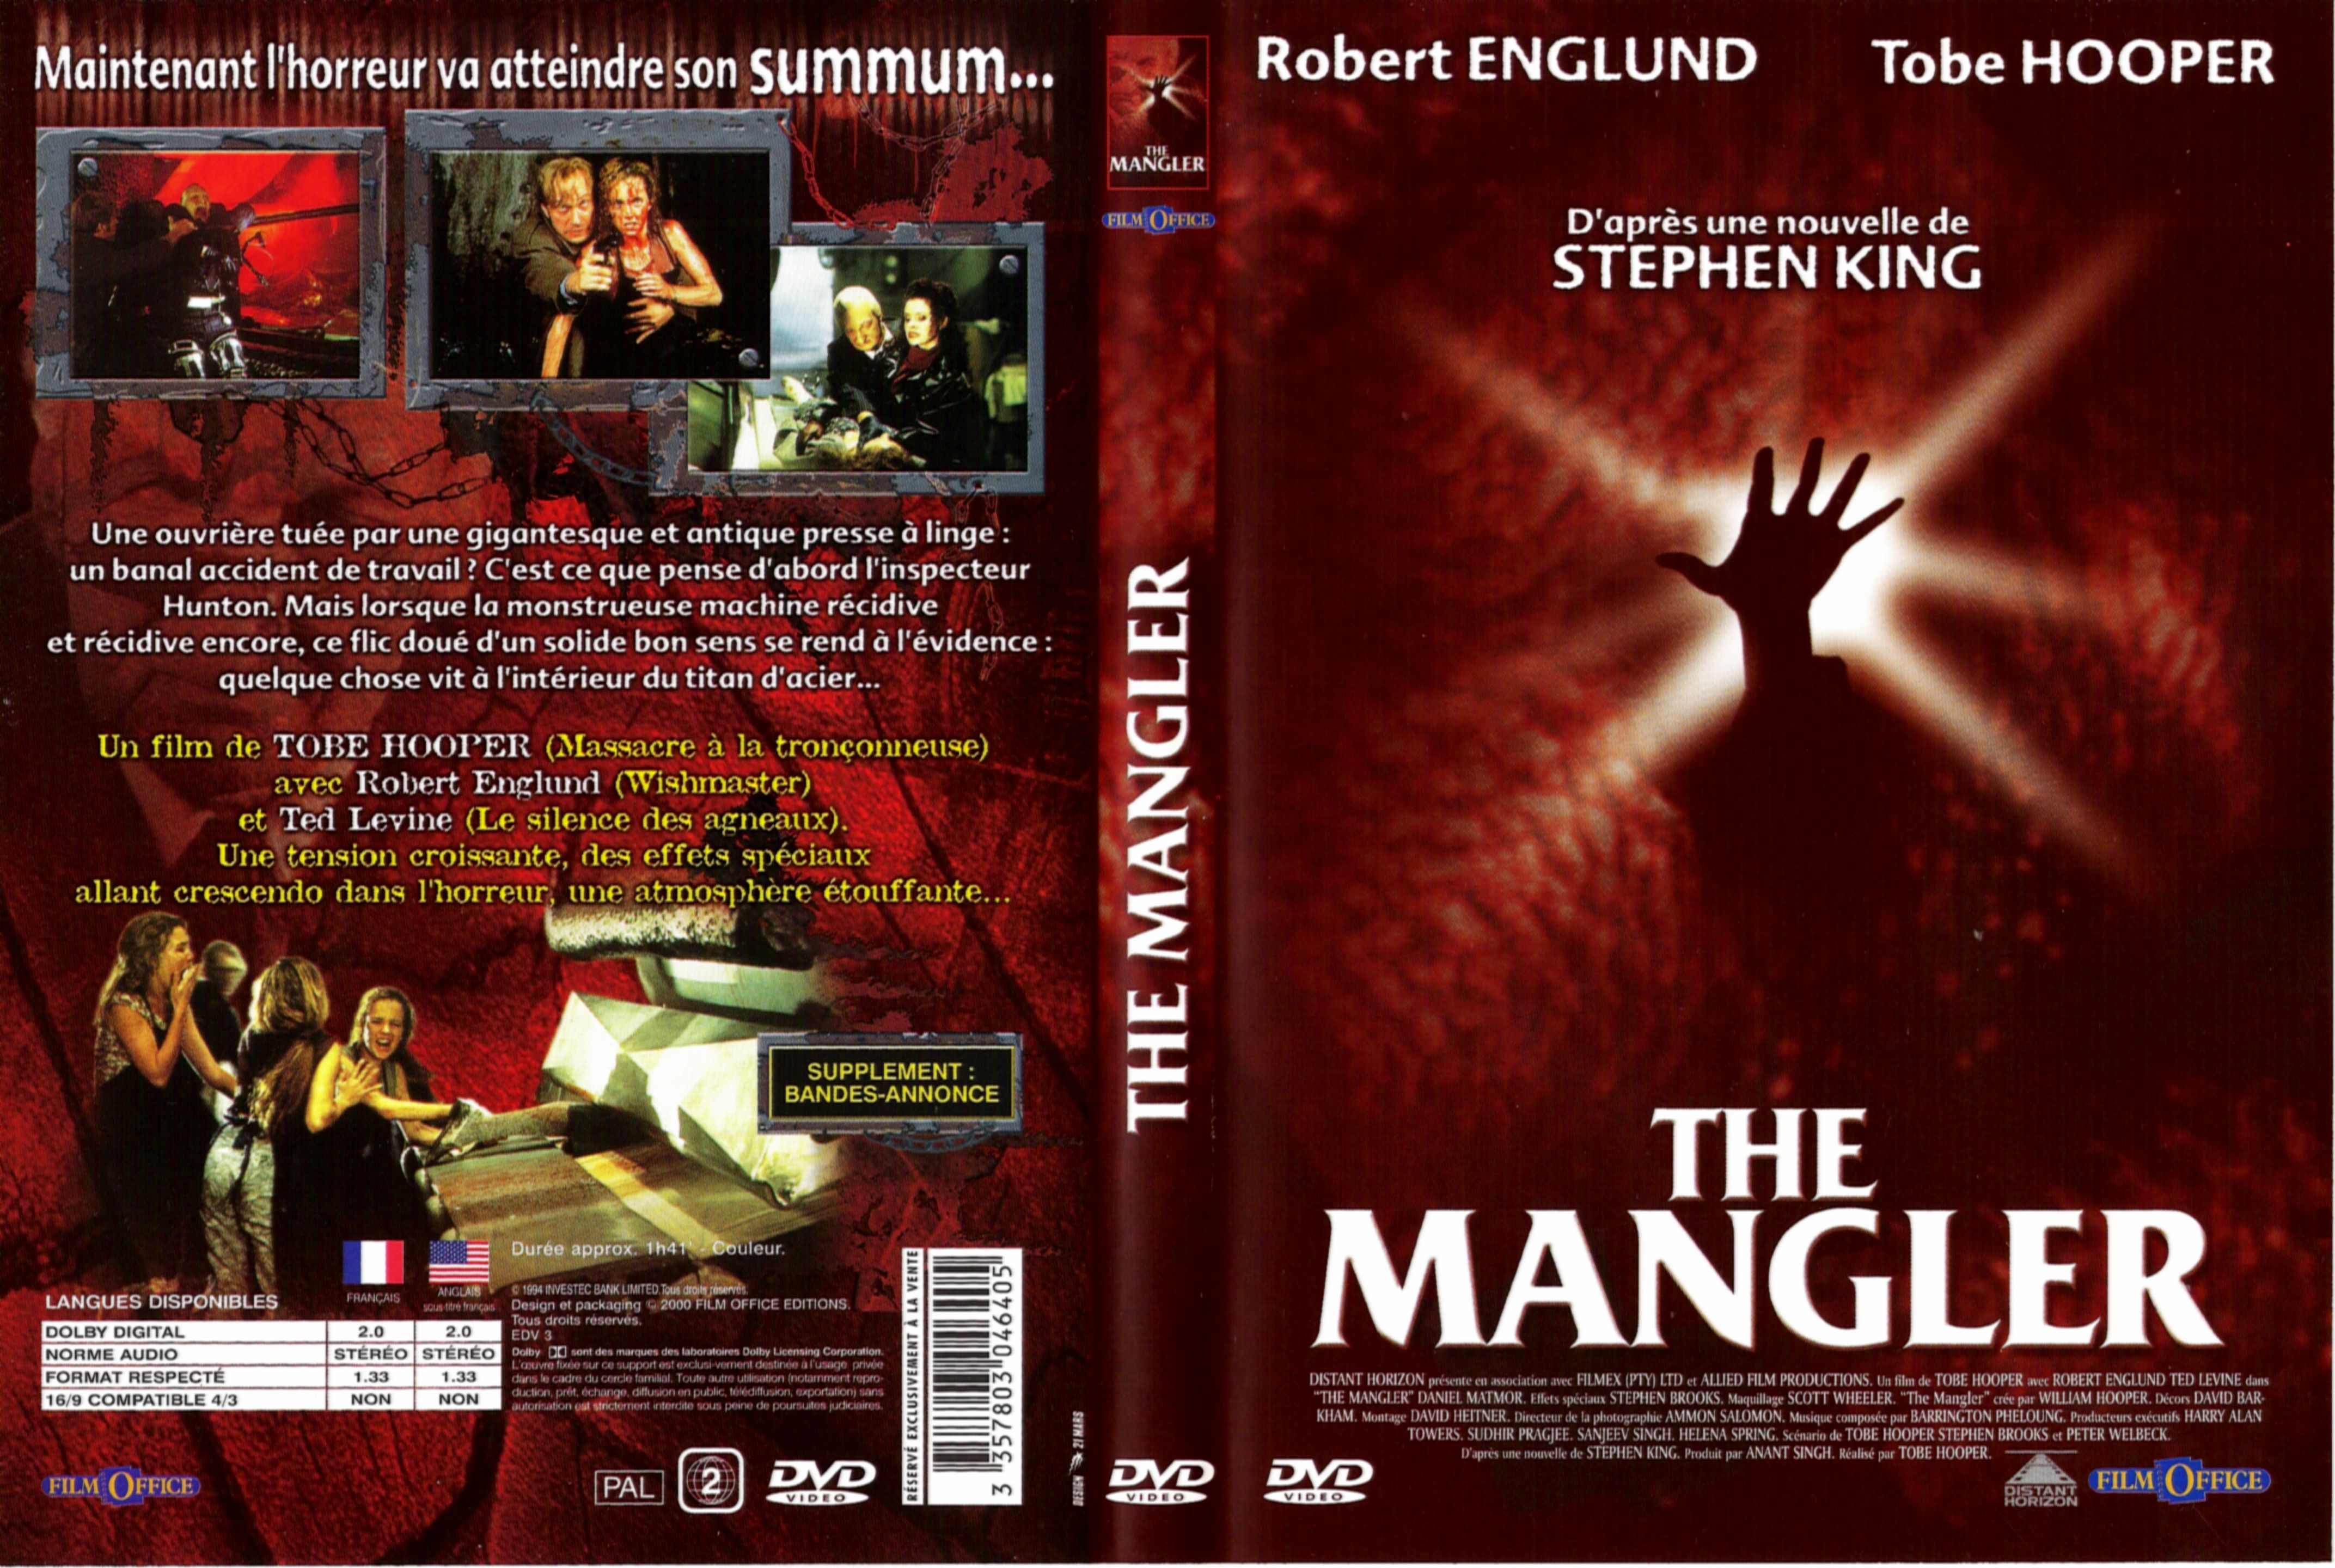 Jaquette DVD The mangler